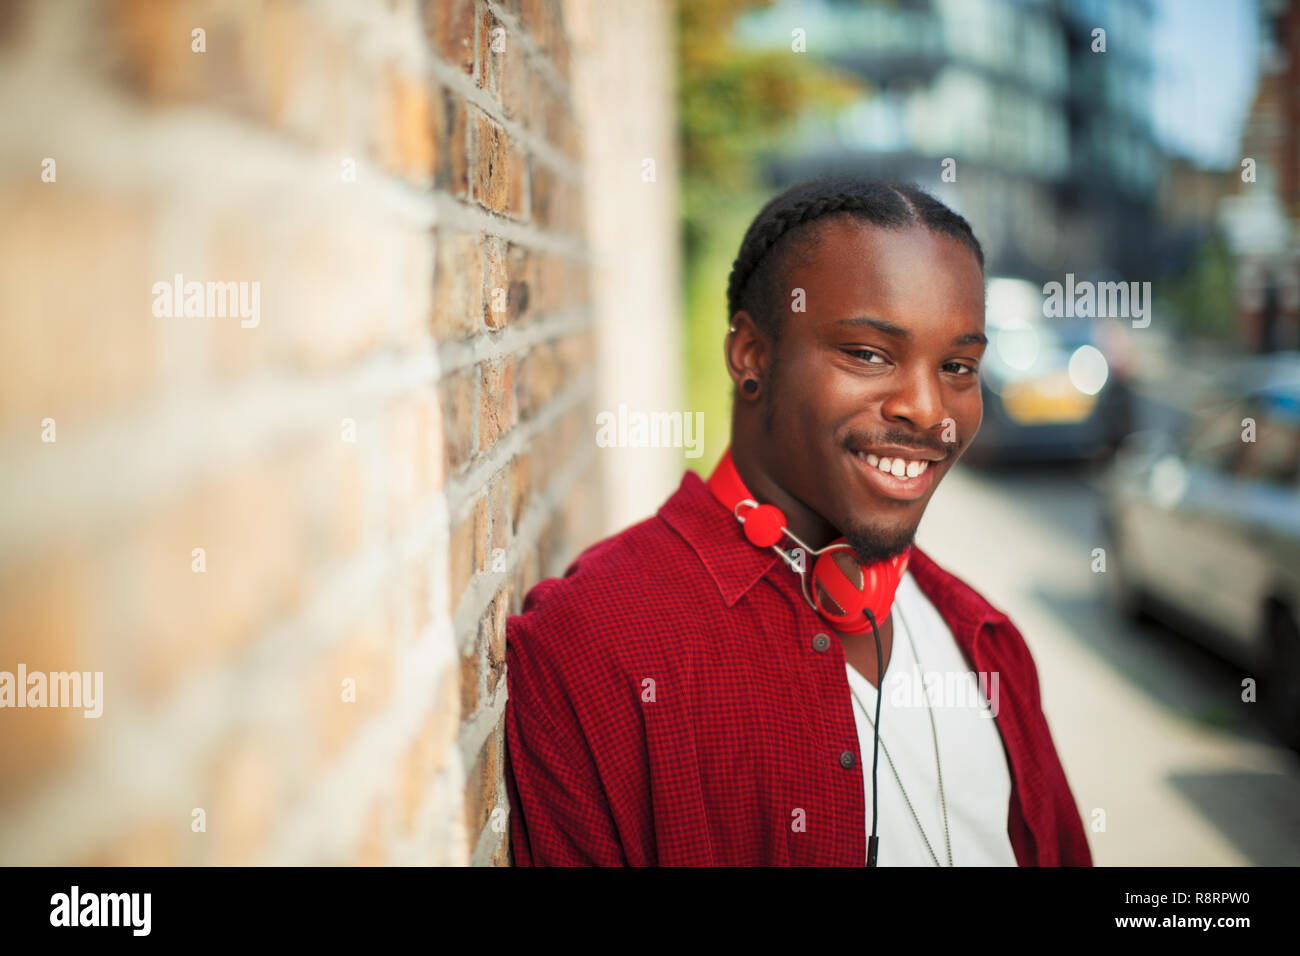 Portrait smiling, confident teenage boy with headphones on urban sidewalk Stock Photo